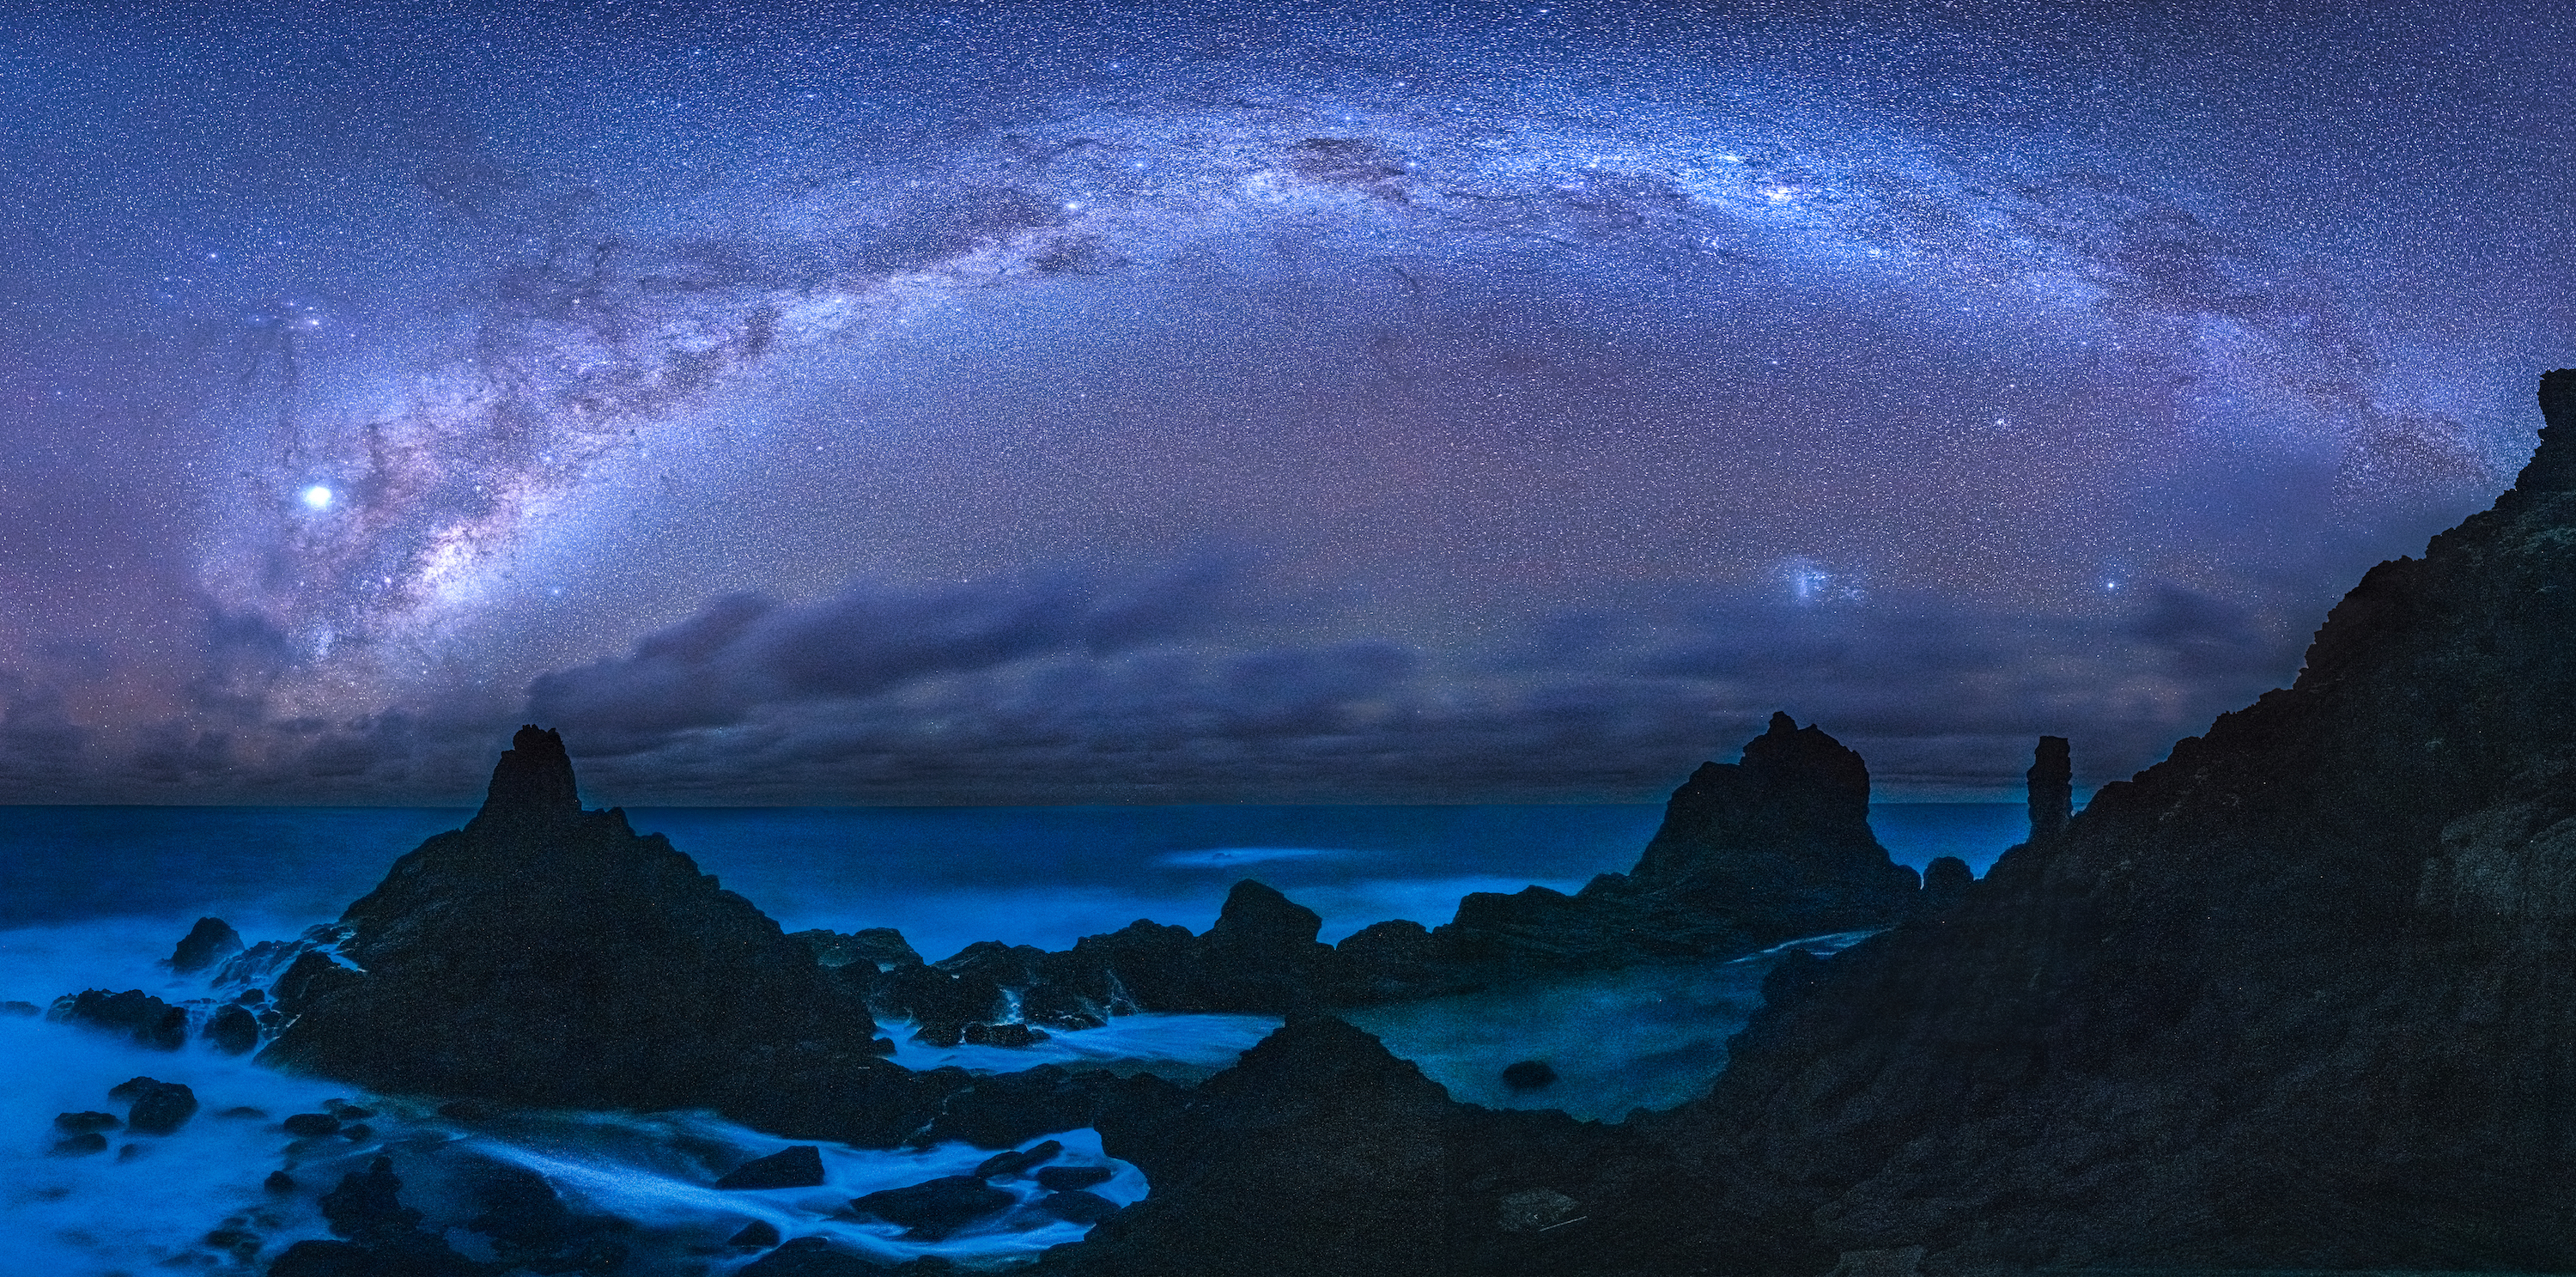 Pitcairn Islands Announced International Dark Sky Sanctuary Image